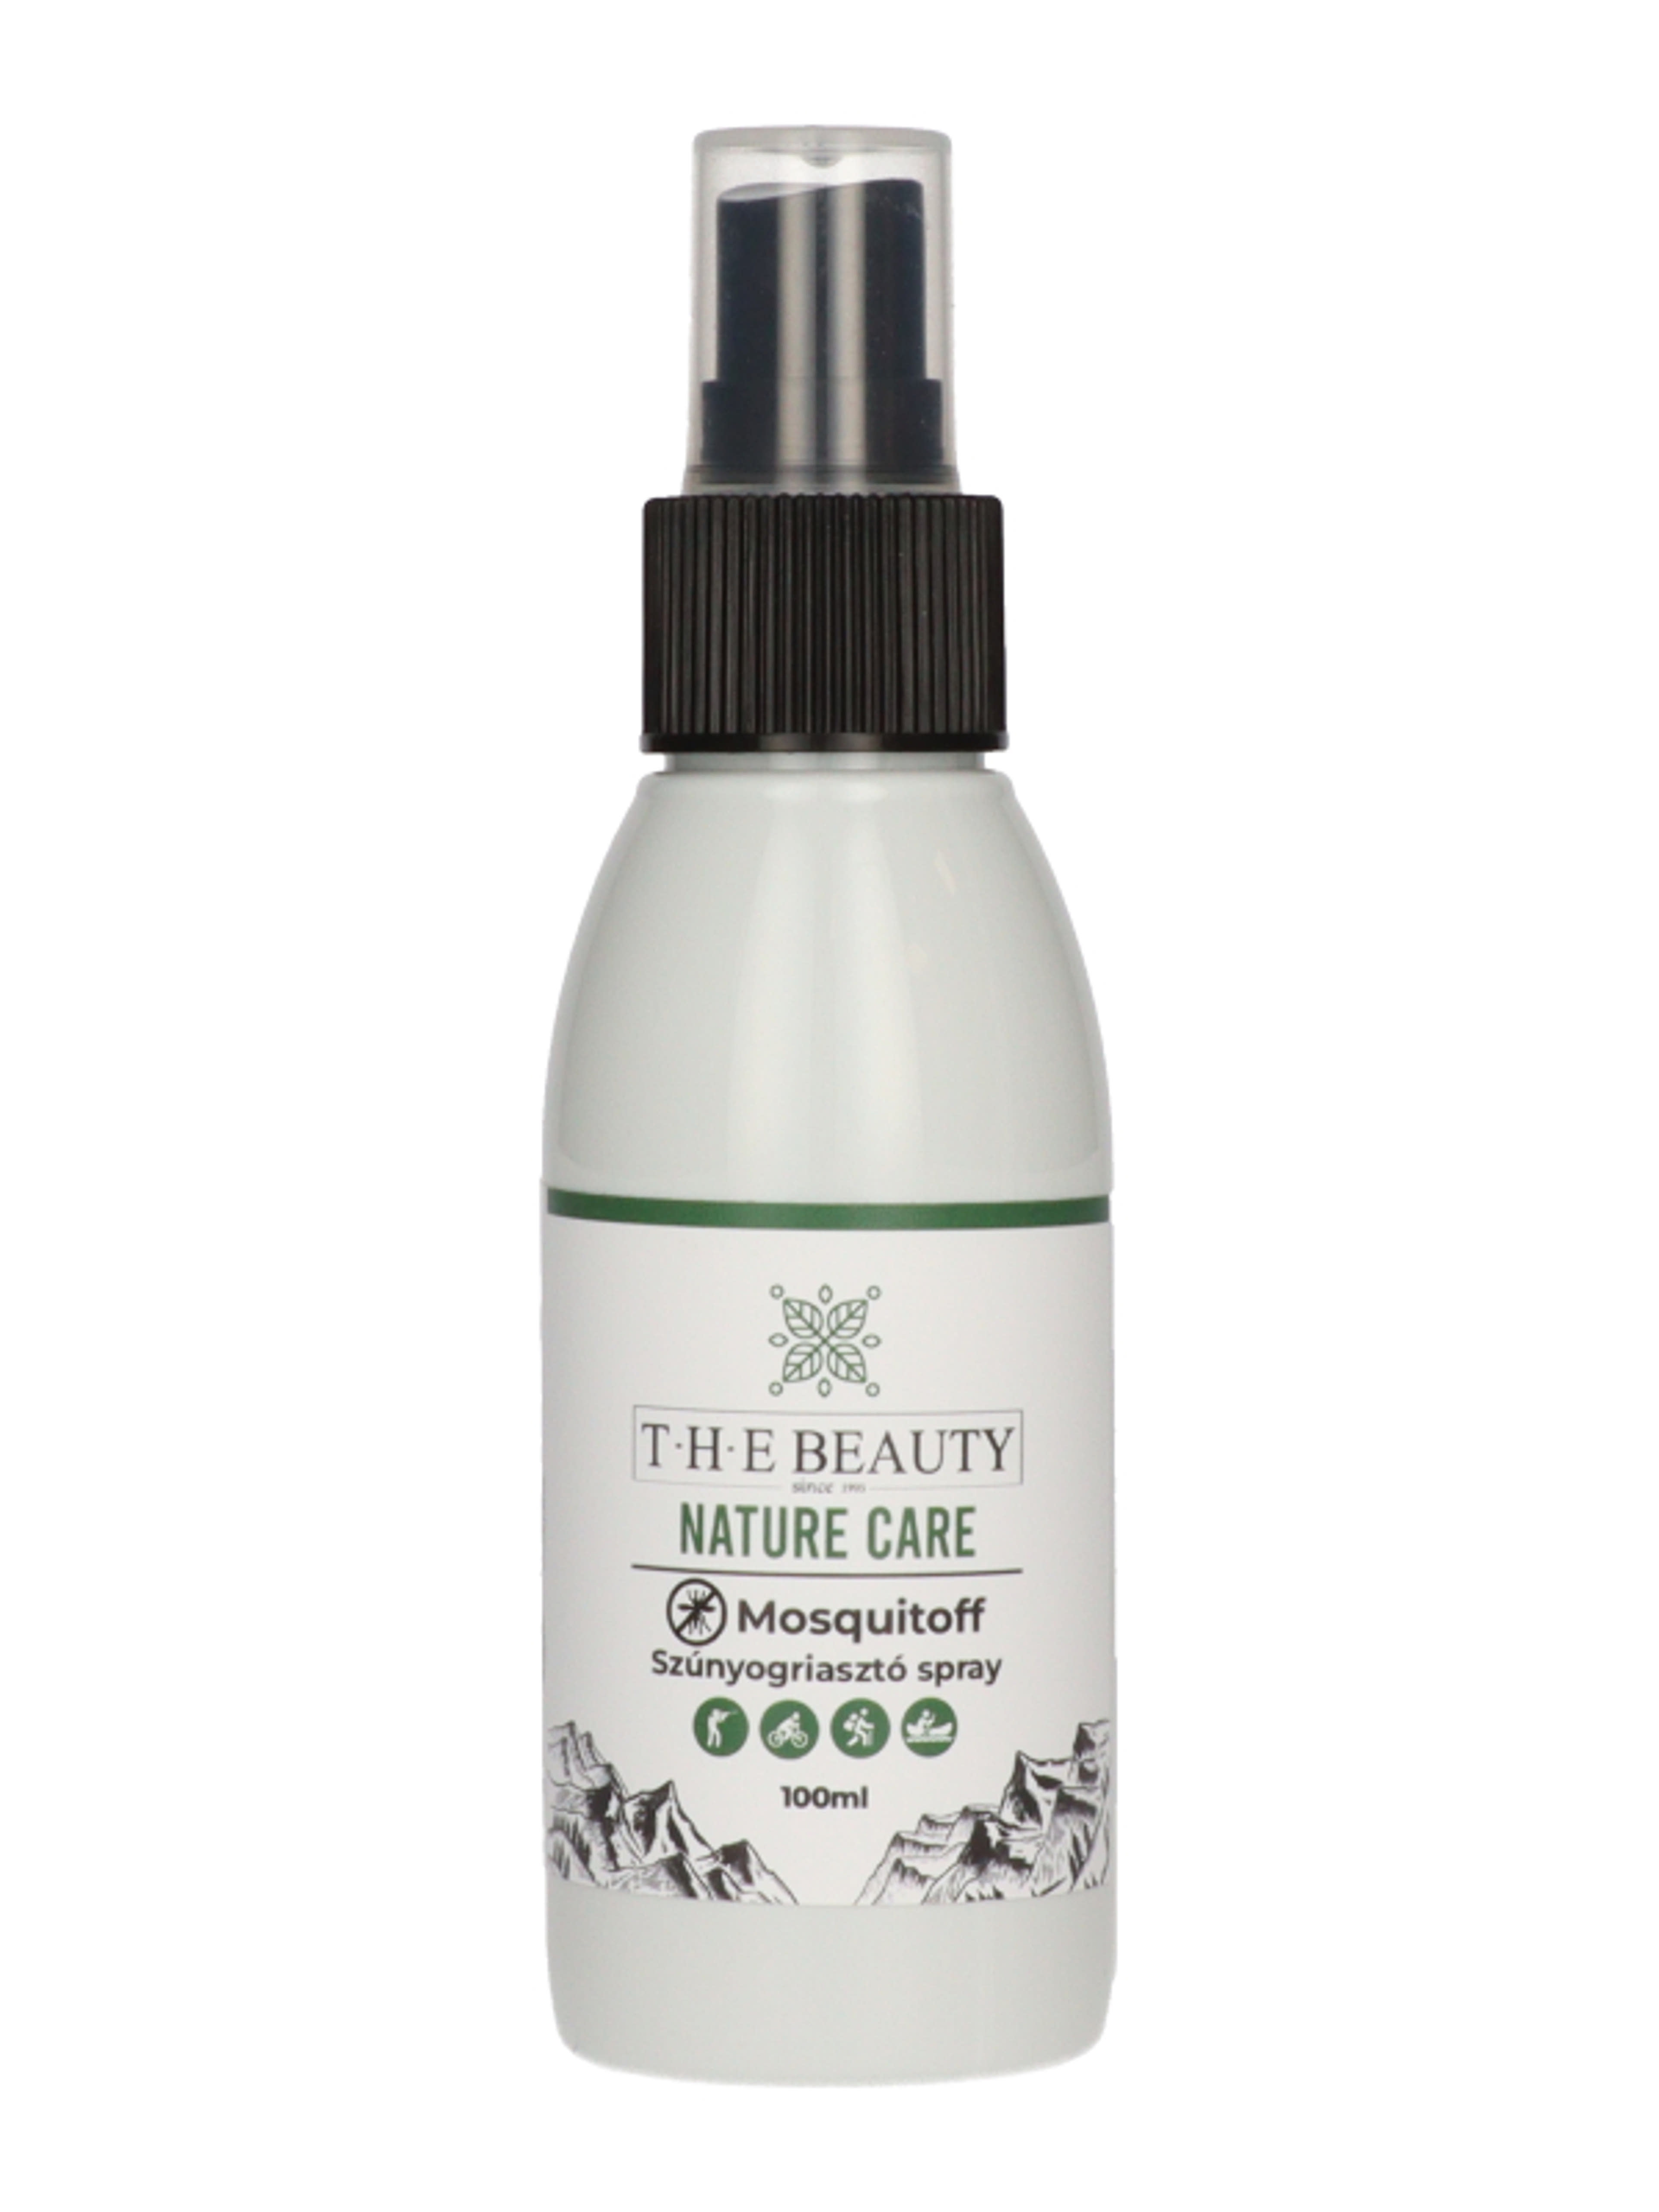 T.H.E Beauty Nature Care szúnyogriasztó spray - 100 ml